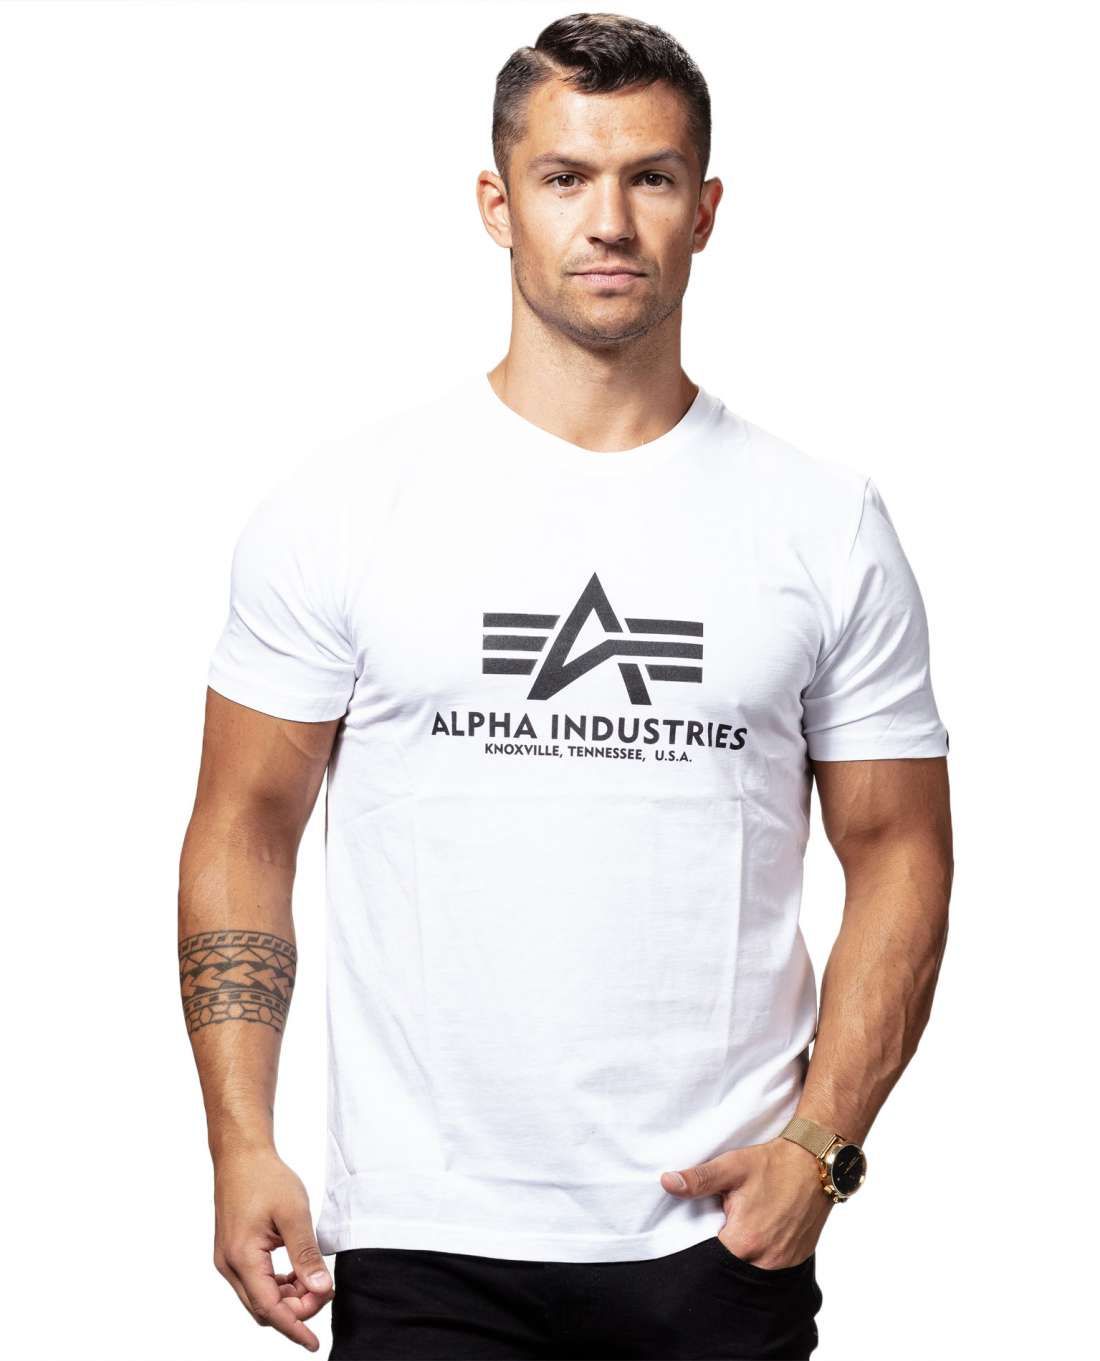 Basic T-Shirt White Alpha Industries